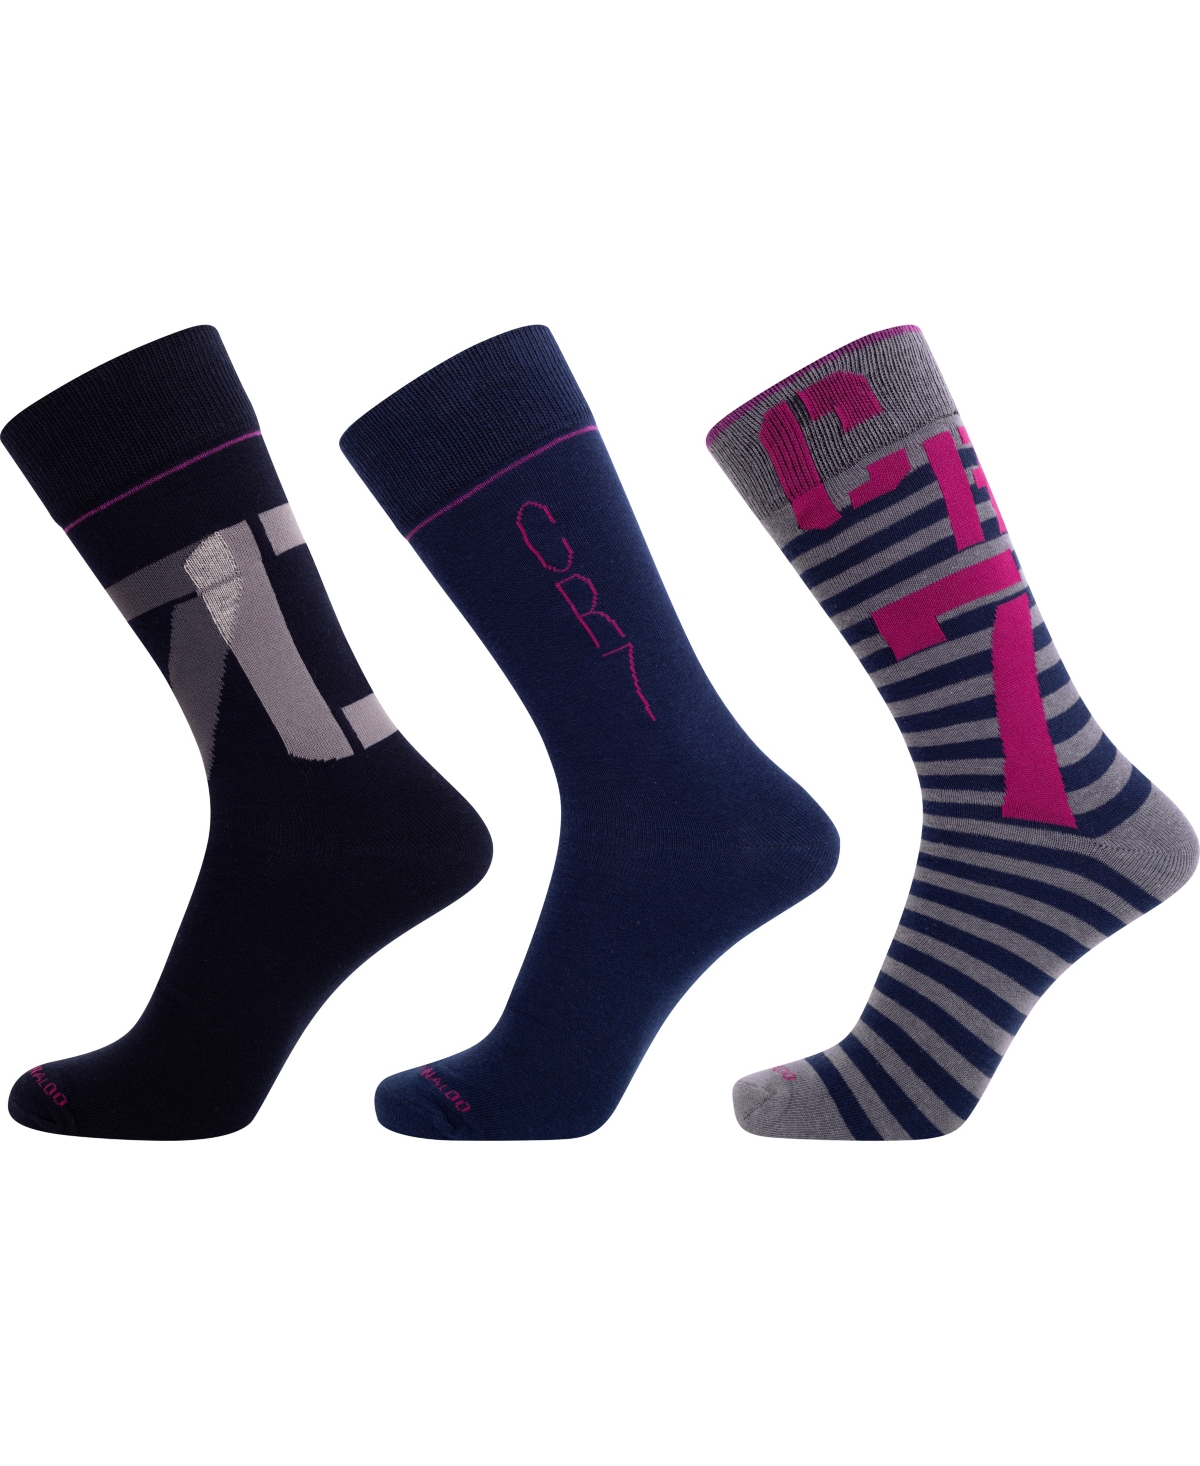 Men's Fashion Socks, Pack of 3 - Blue, Black, Gray, Pink